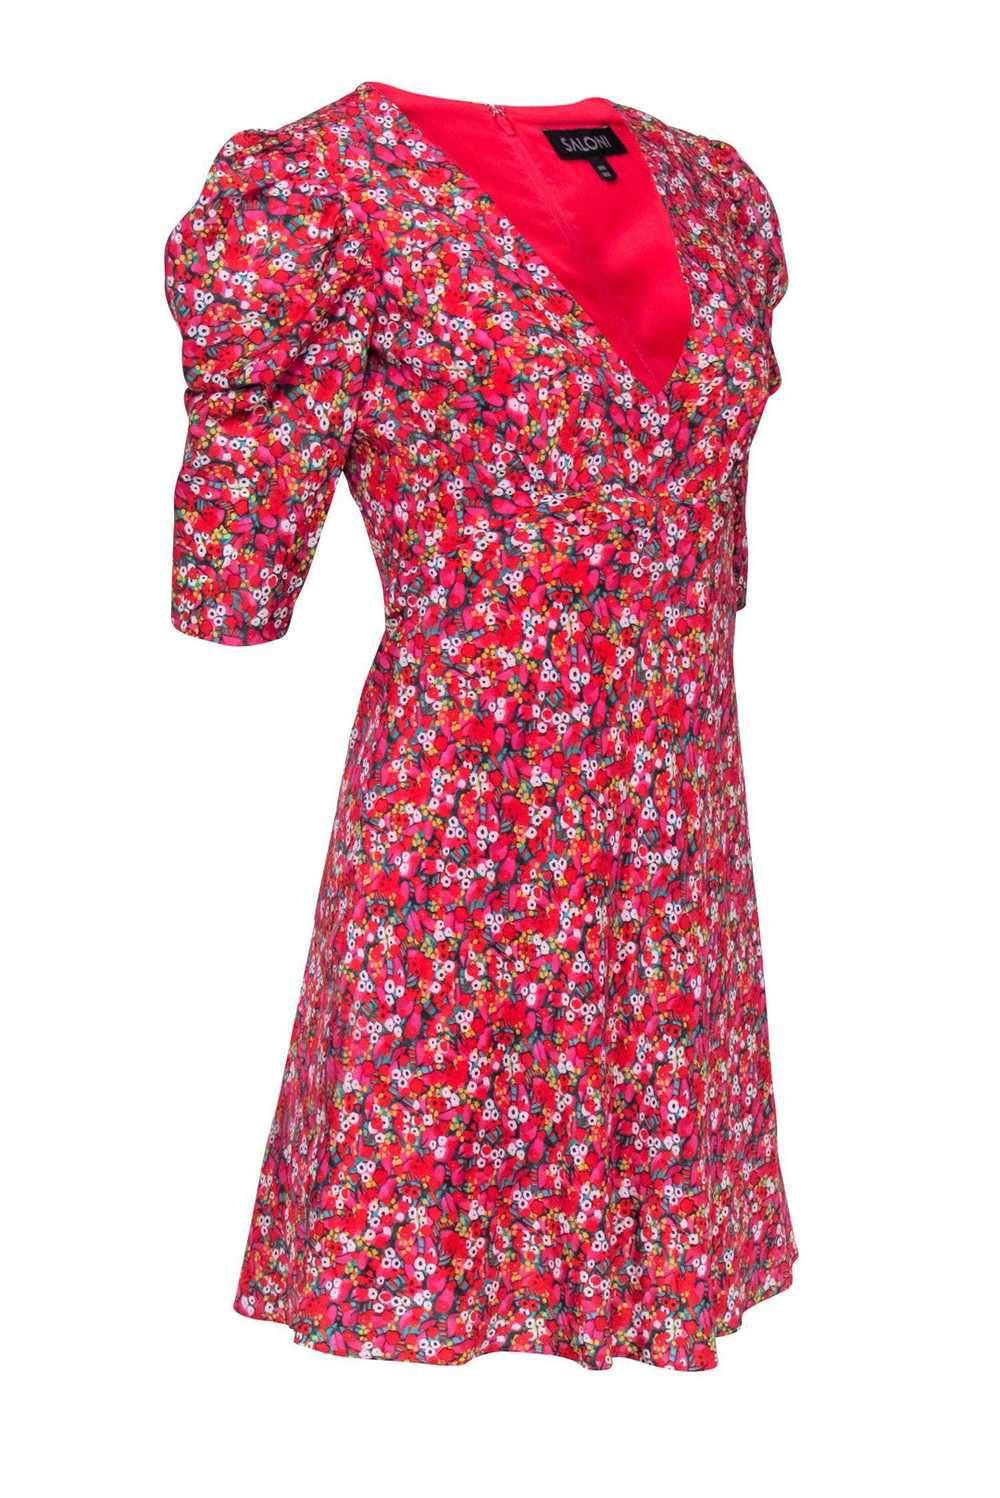 Saloni - Hot Pink & Multi Color Floral Print Dres… - image 2